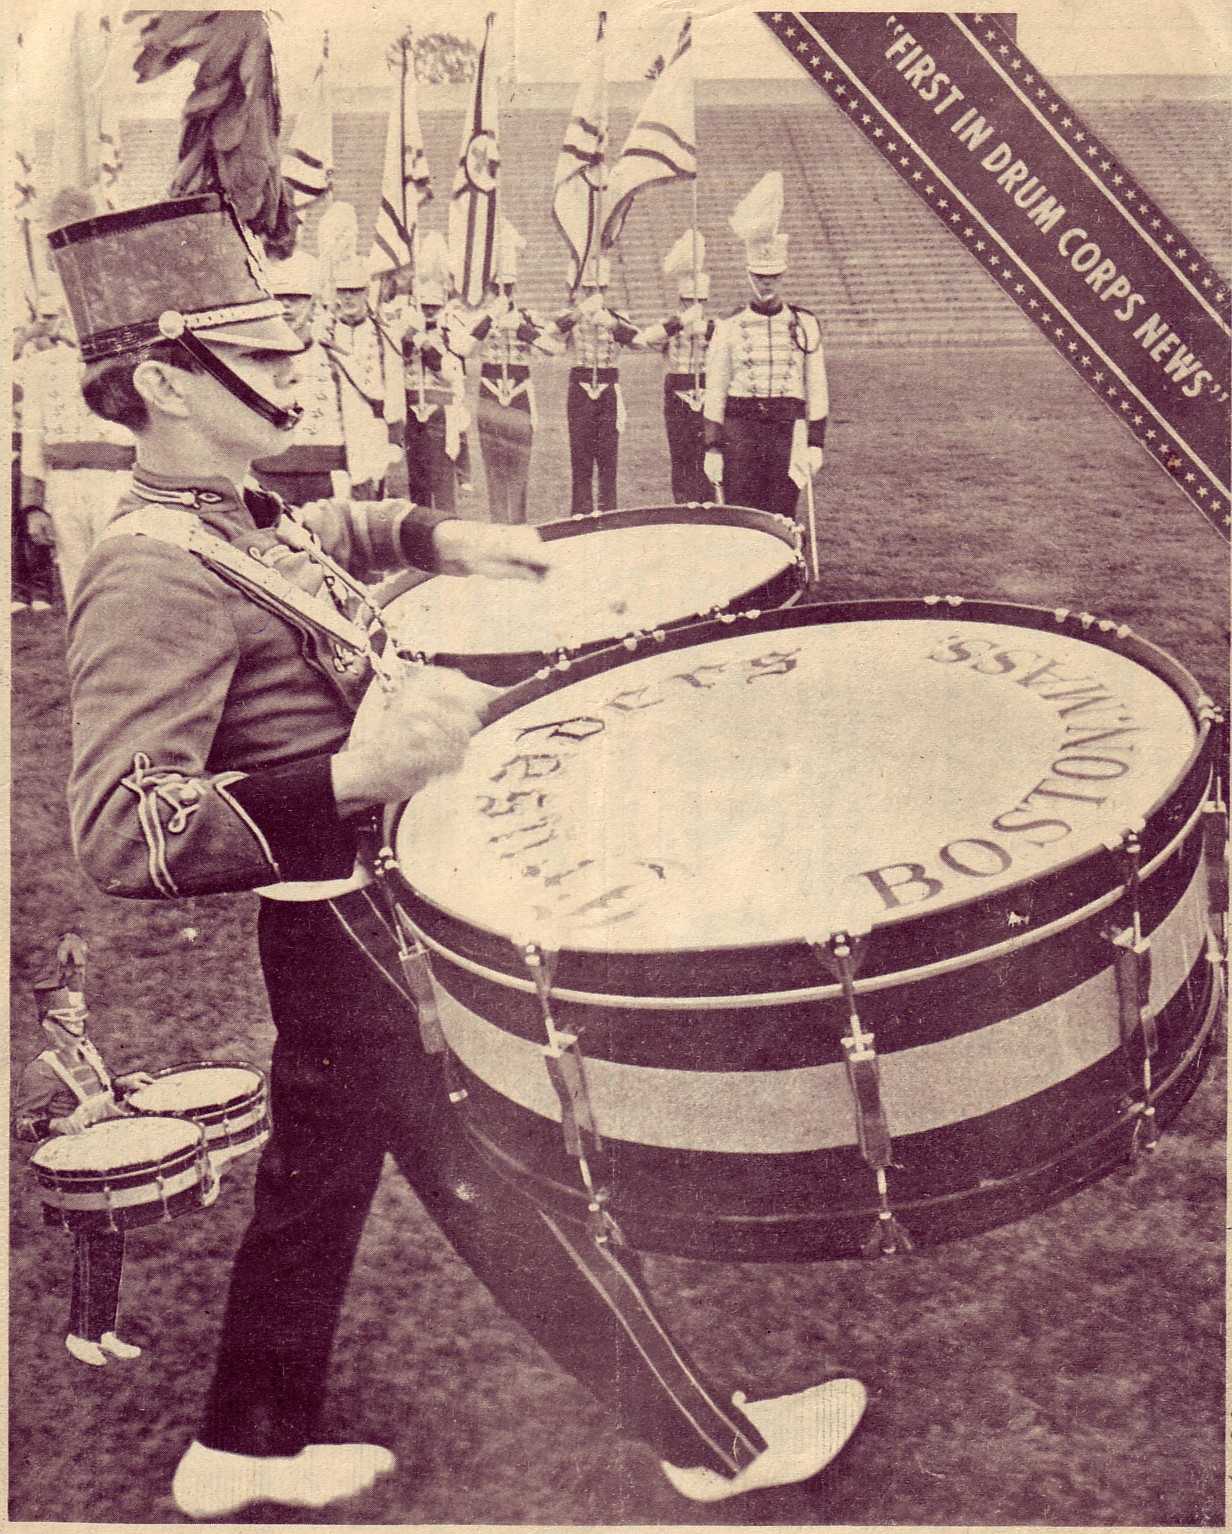 Historical Drum Corps Publications: 04/14/11